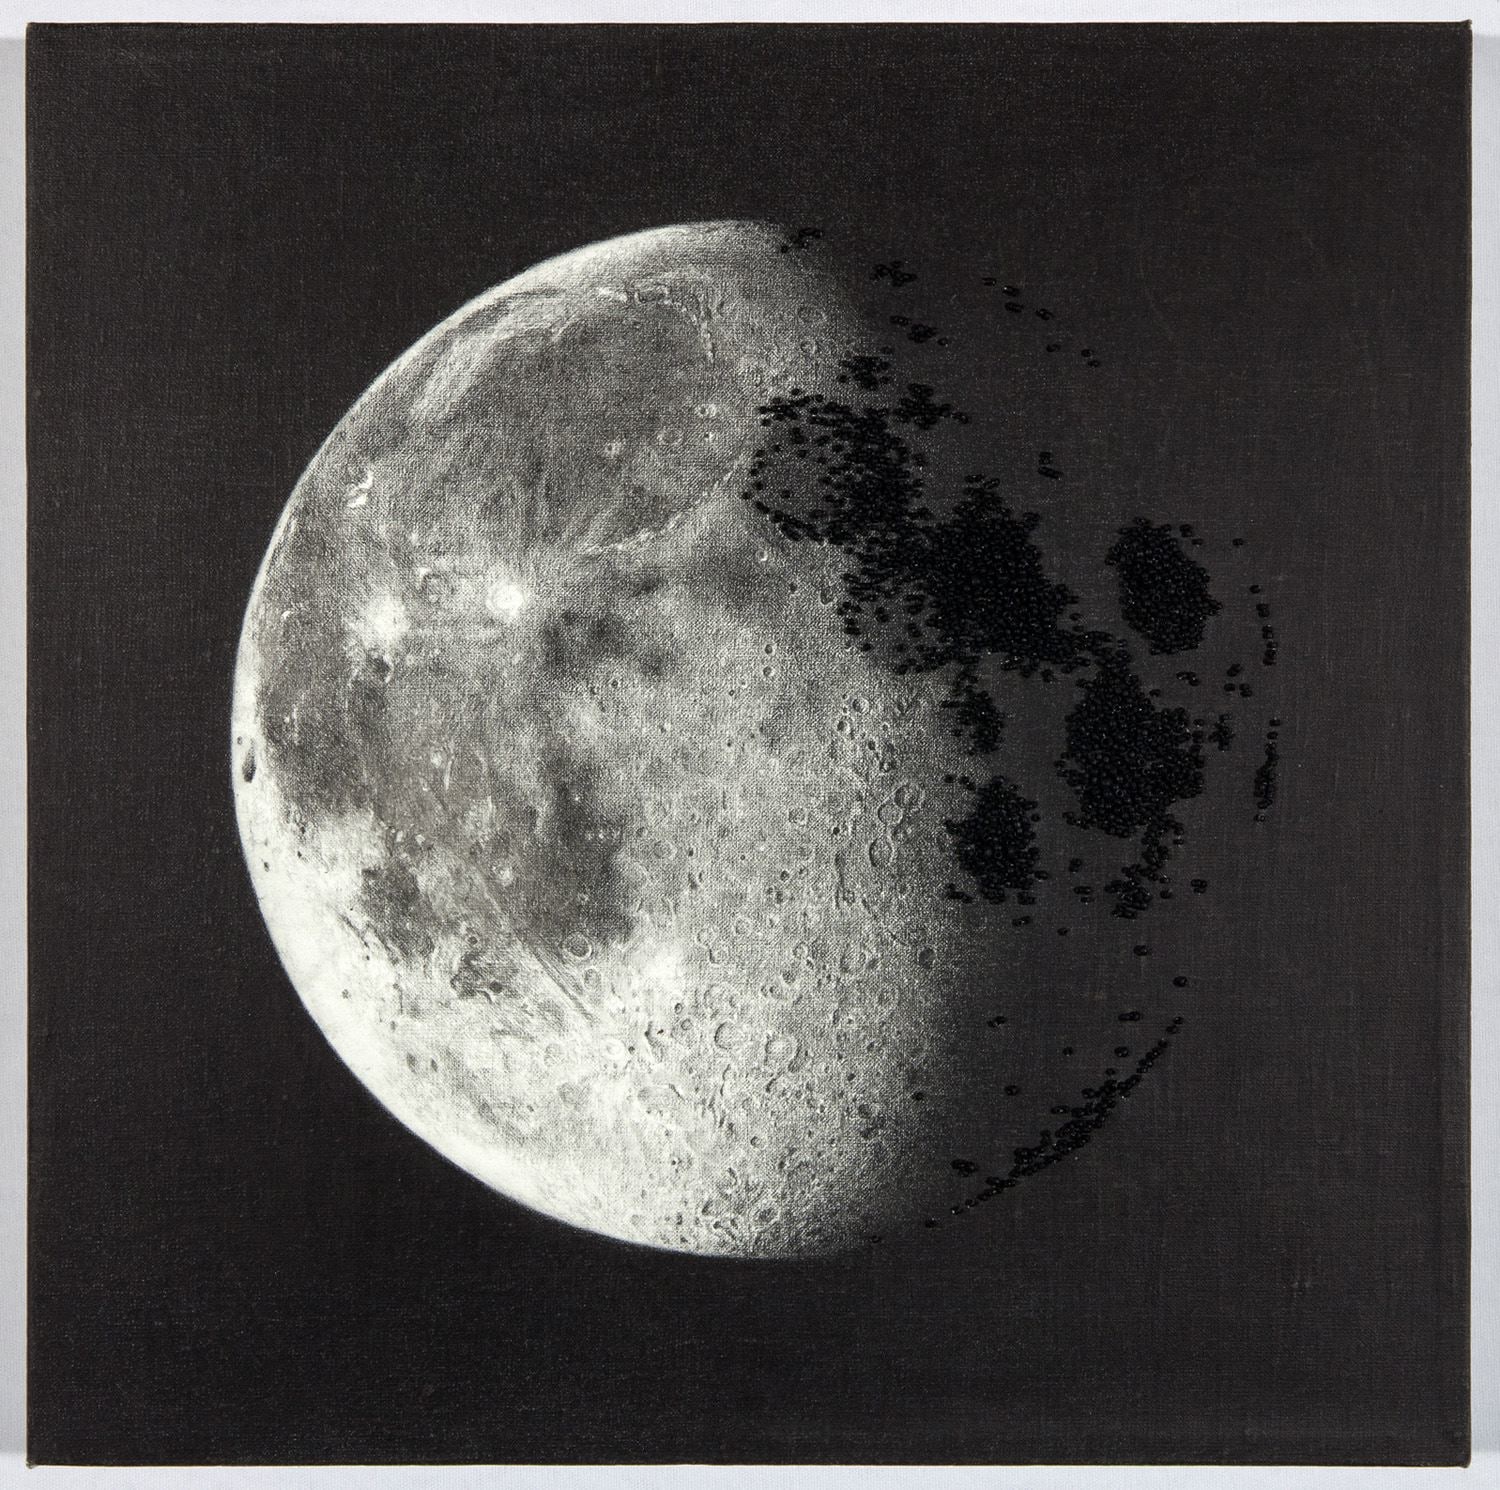 MONICA ZERINGUE, Moonlight Bends Over the Black Silence, 2013